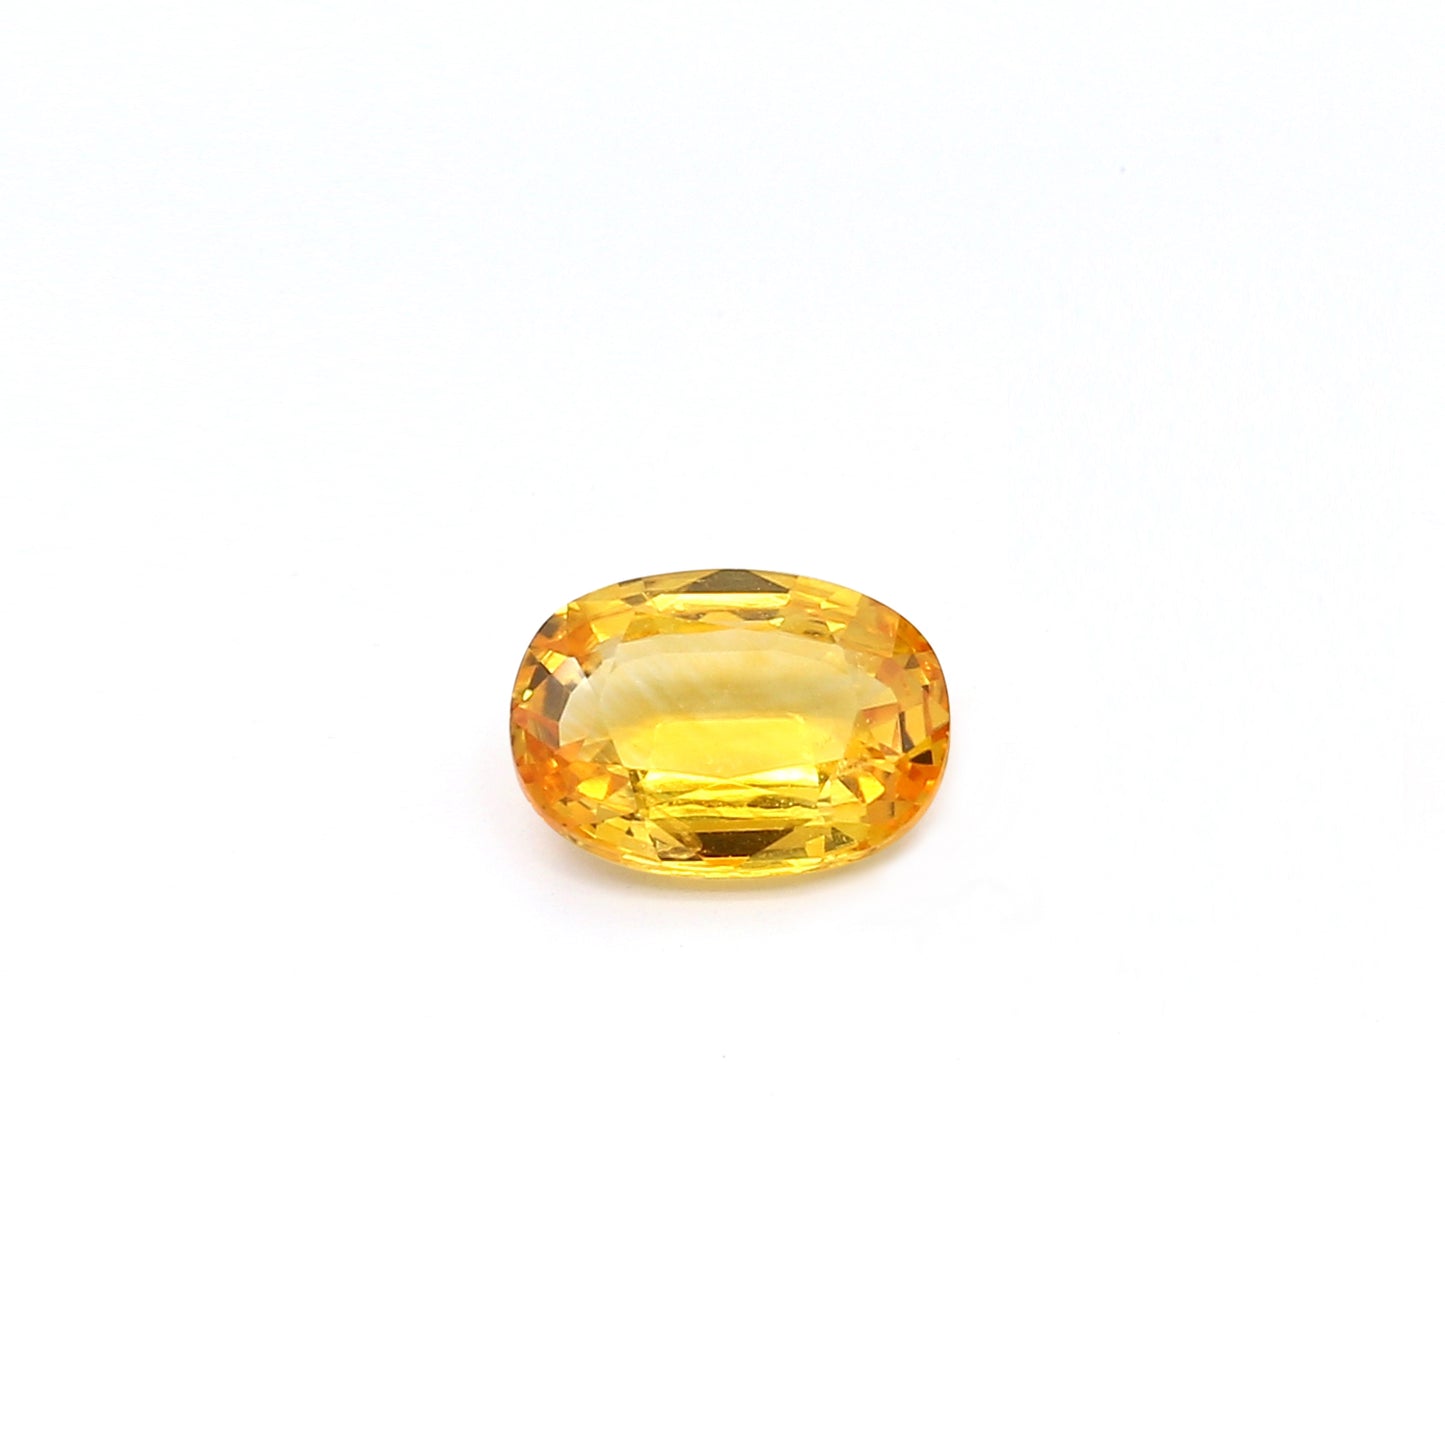 2.89ct Yellow, Oval Sapphire Pair, Heated, Sri Lanka - 8.0 x 5.8mm